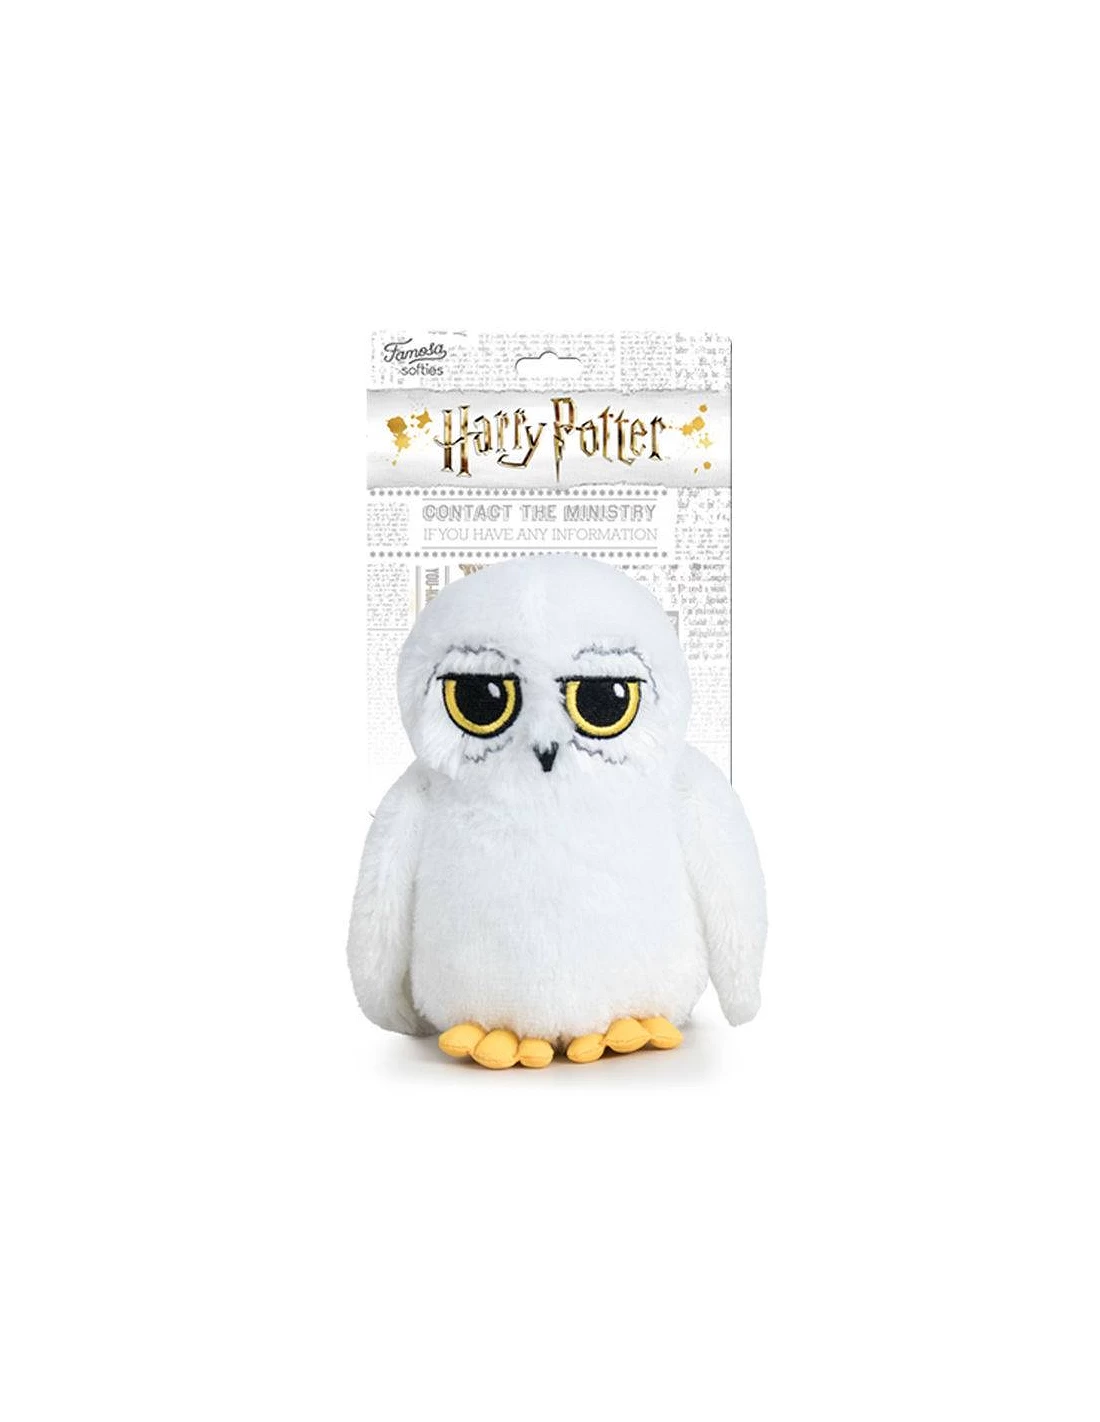 Peluche Hedwig Harry Potter